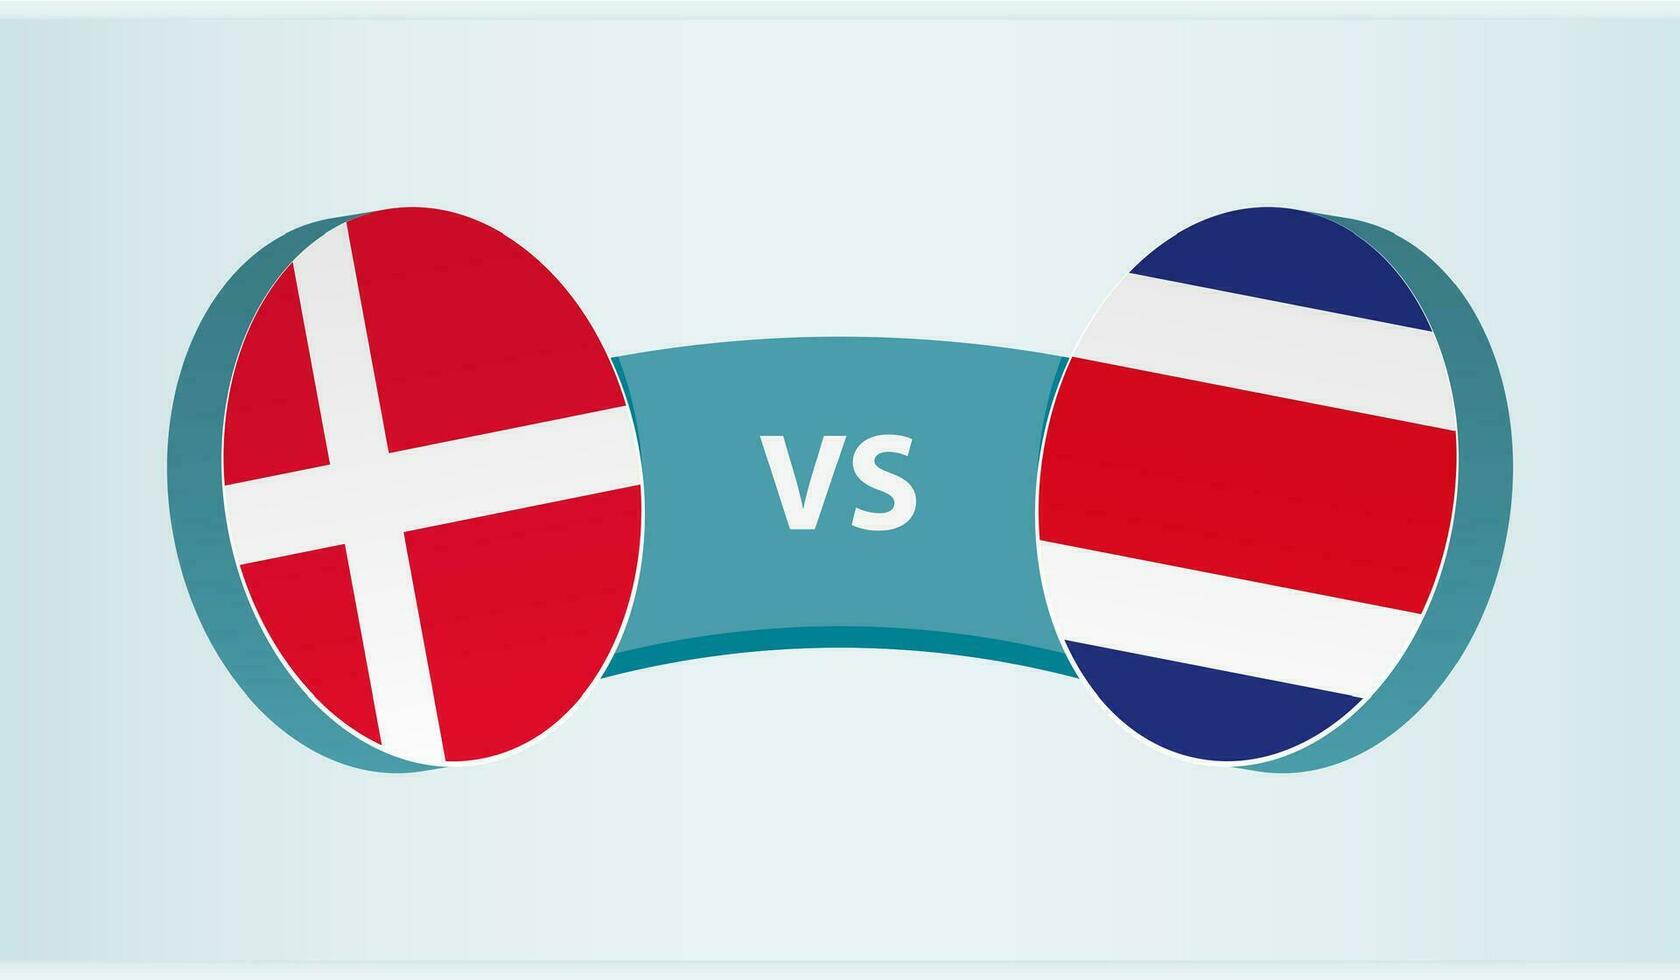 Denmark versus Costa Rica, team sports competition concept. vector